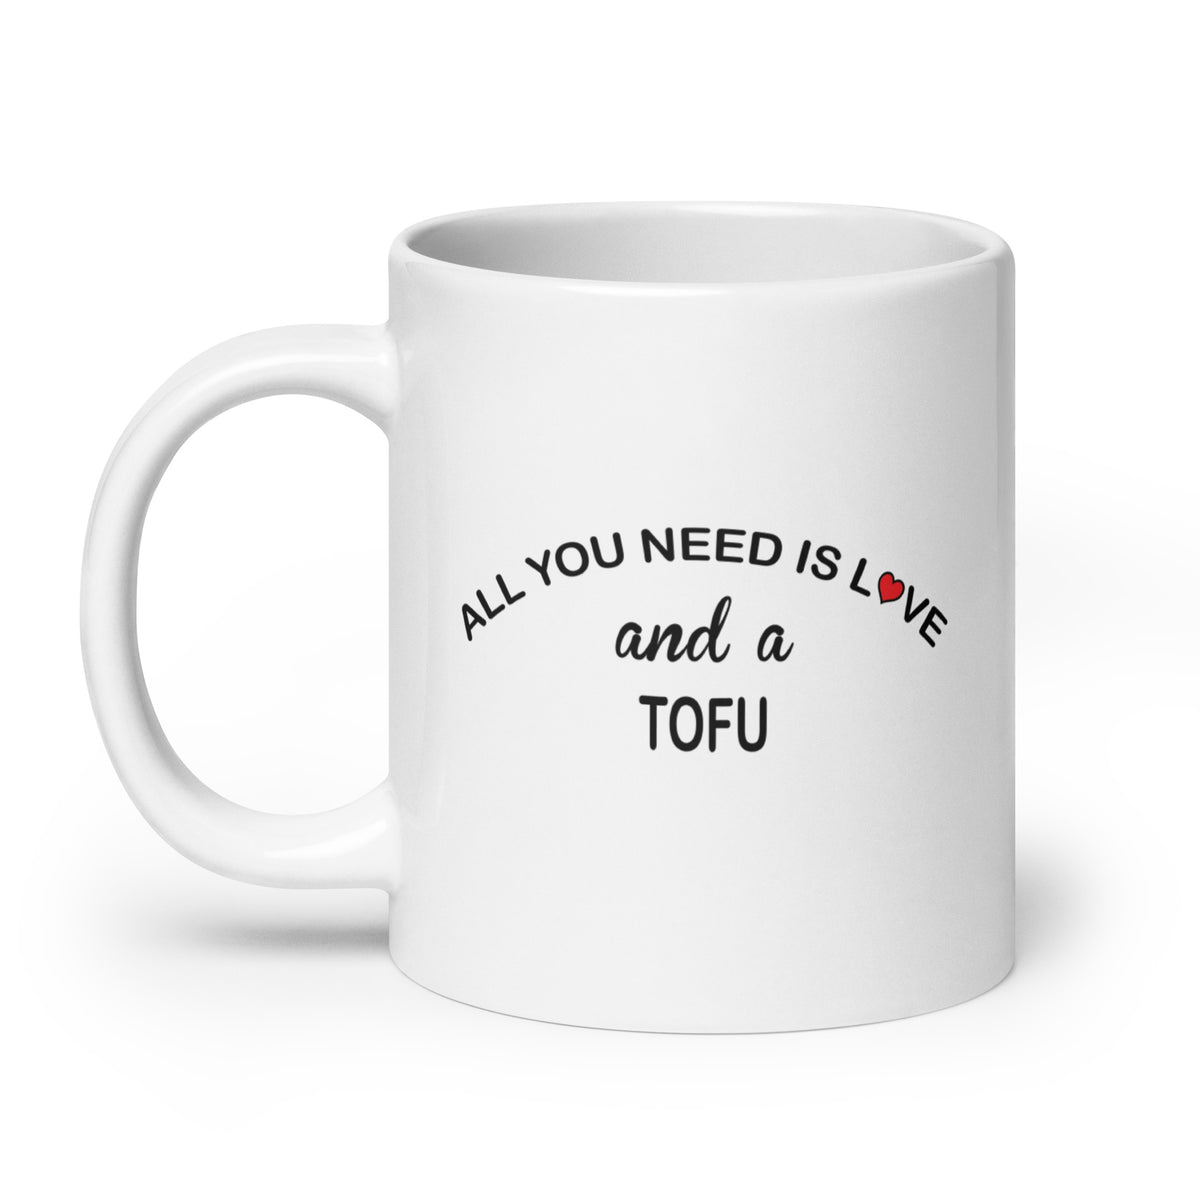 ALL YOU NEED IS LOVE TOFU White glossy mug